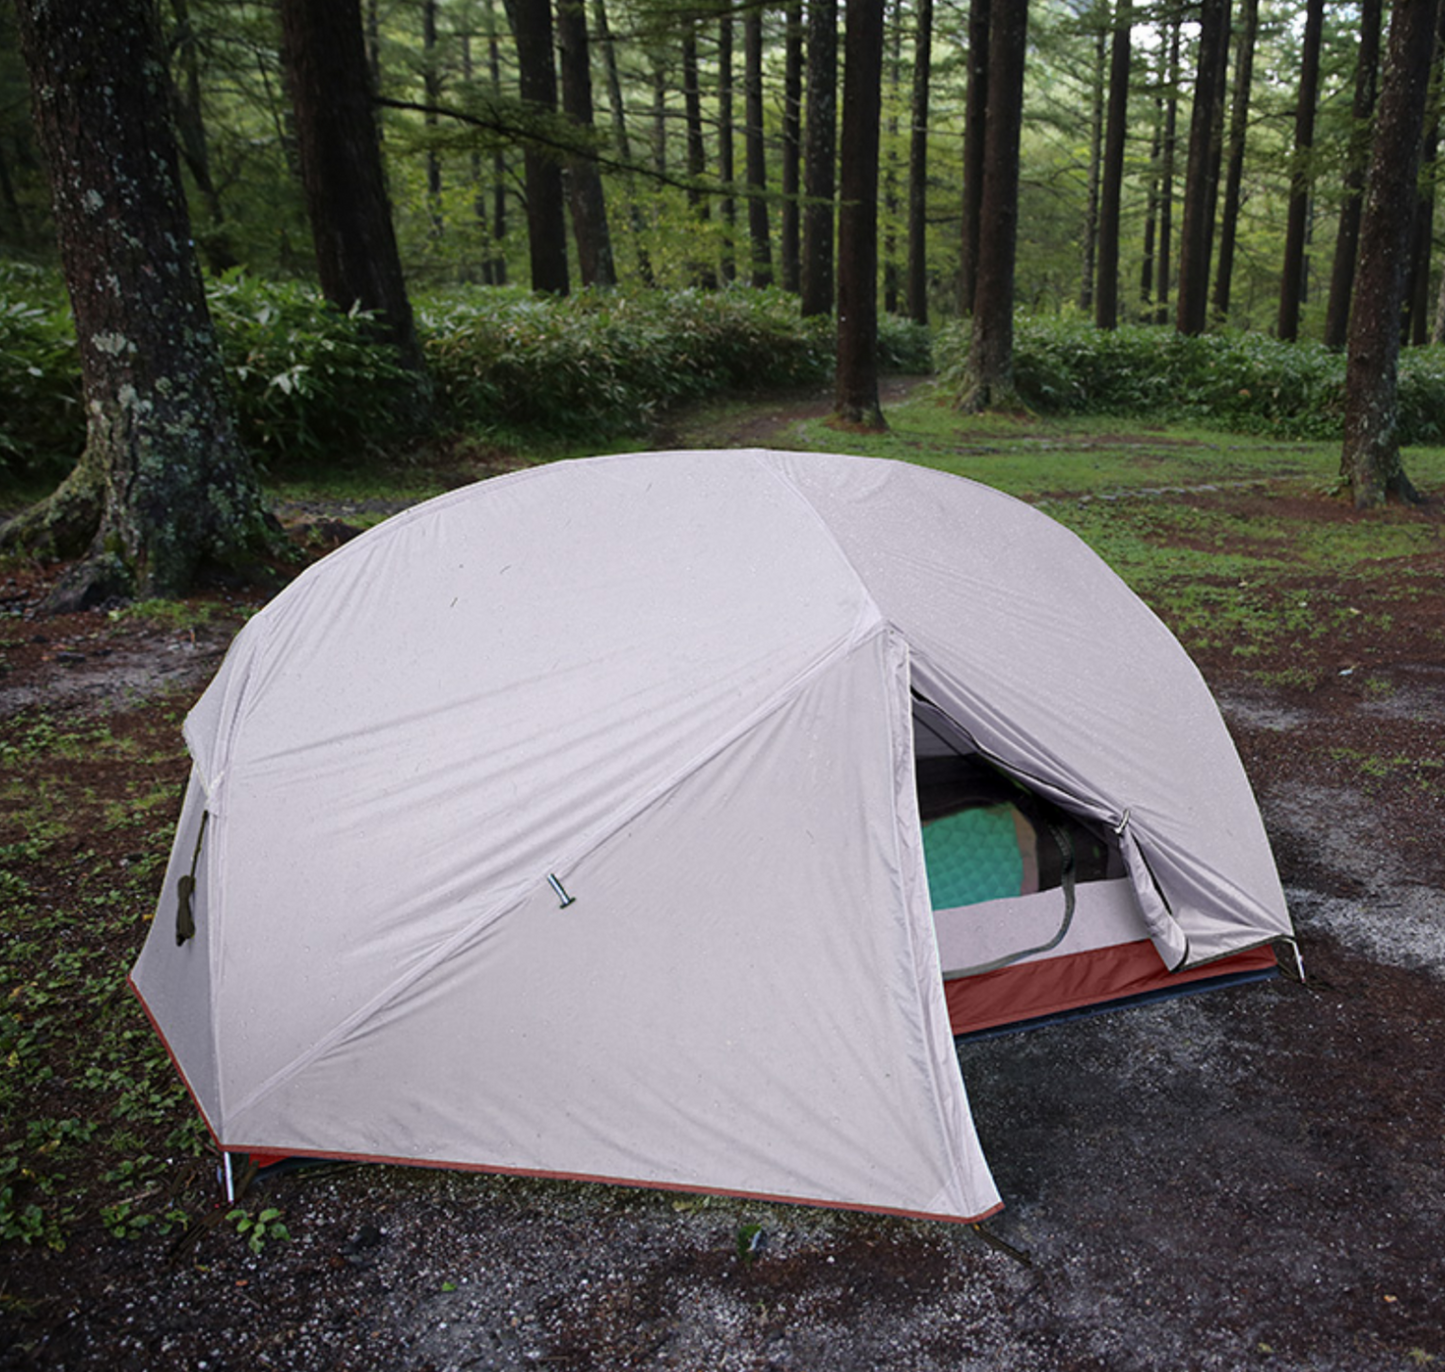 All Seasons Camping Tent